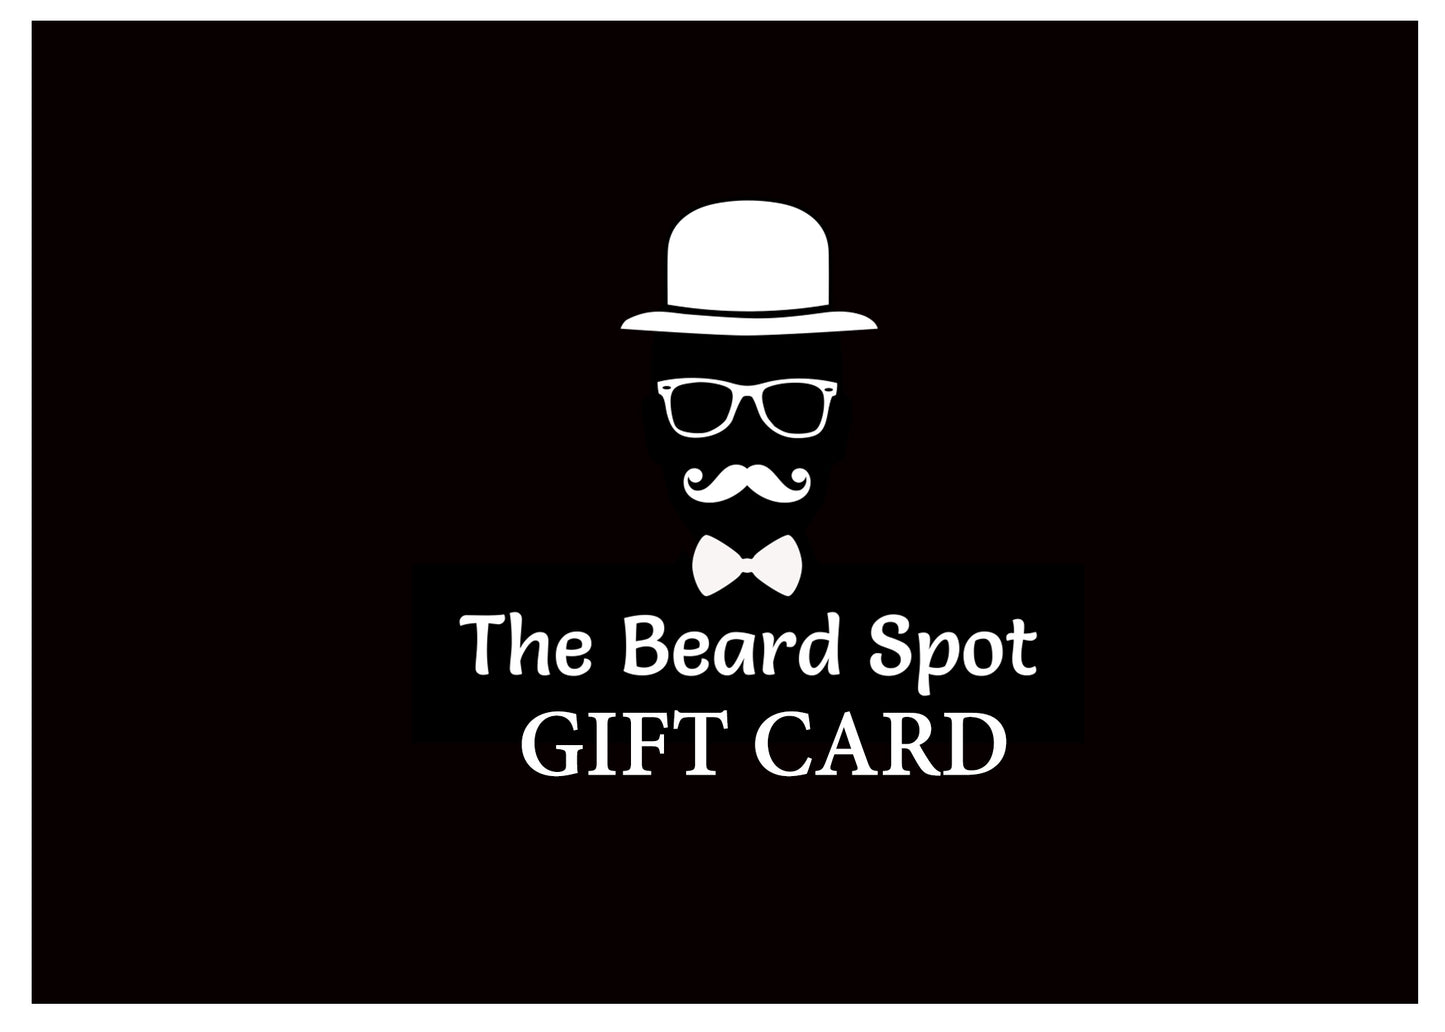 The Beard Spot Gift Card